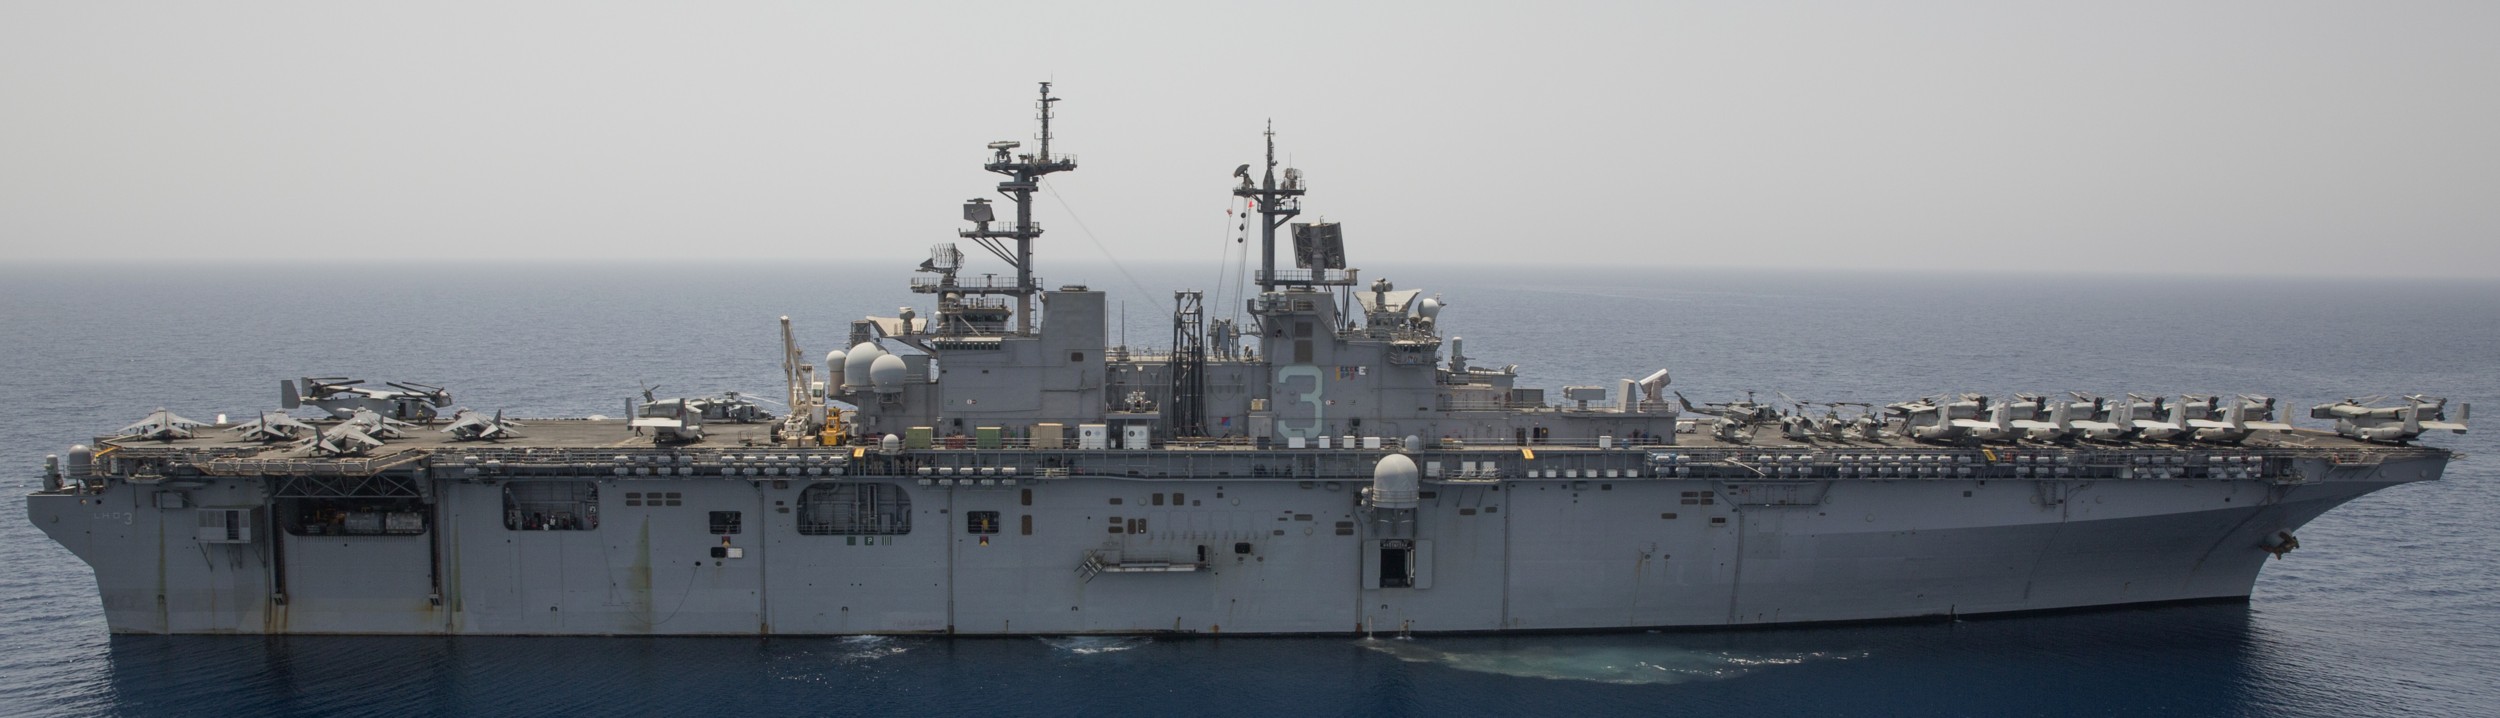 lhd-3 uss kearsarge wasp class amphibious assault ship us navy marines vmm-266 114